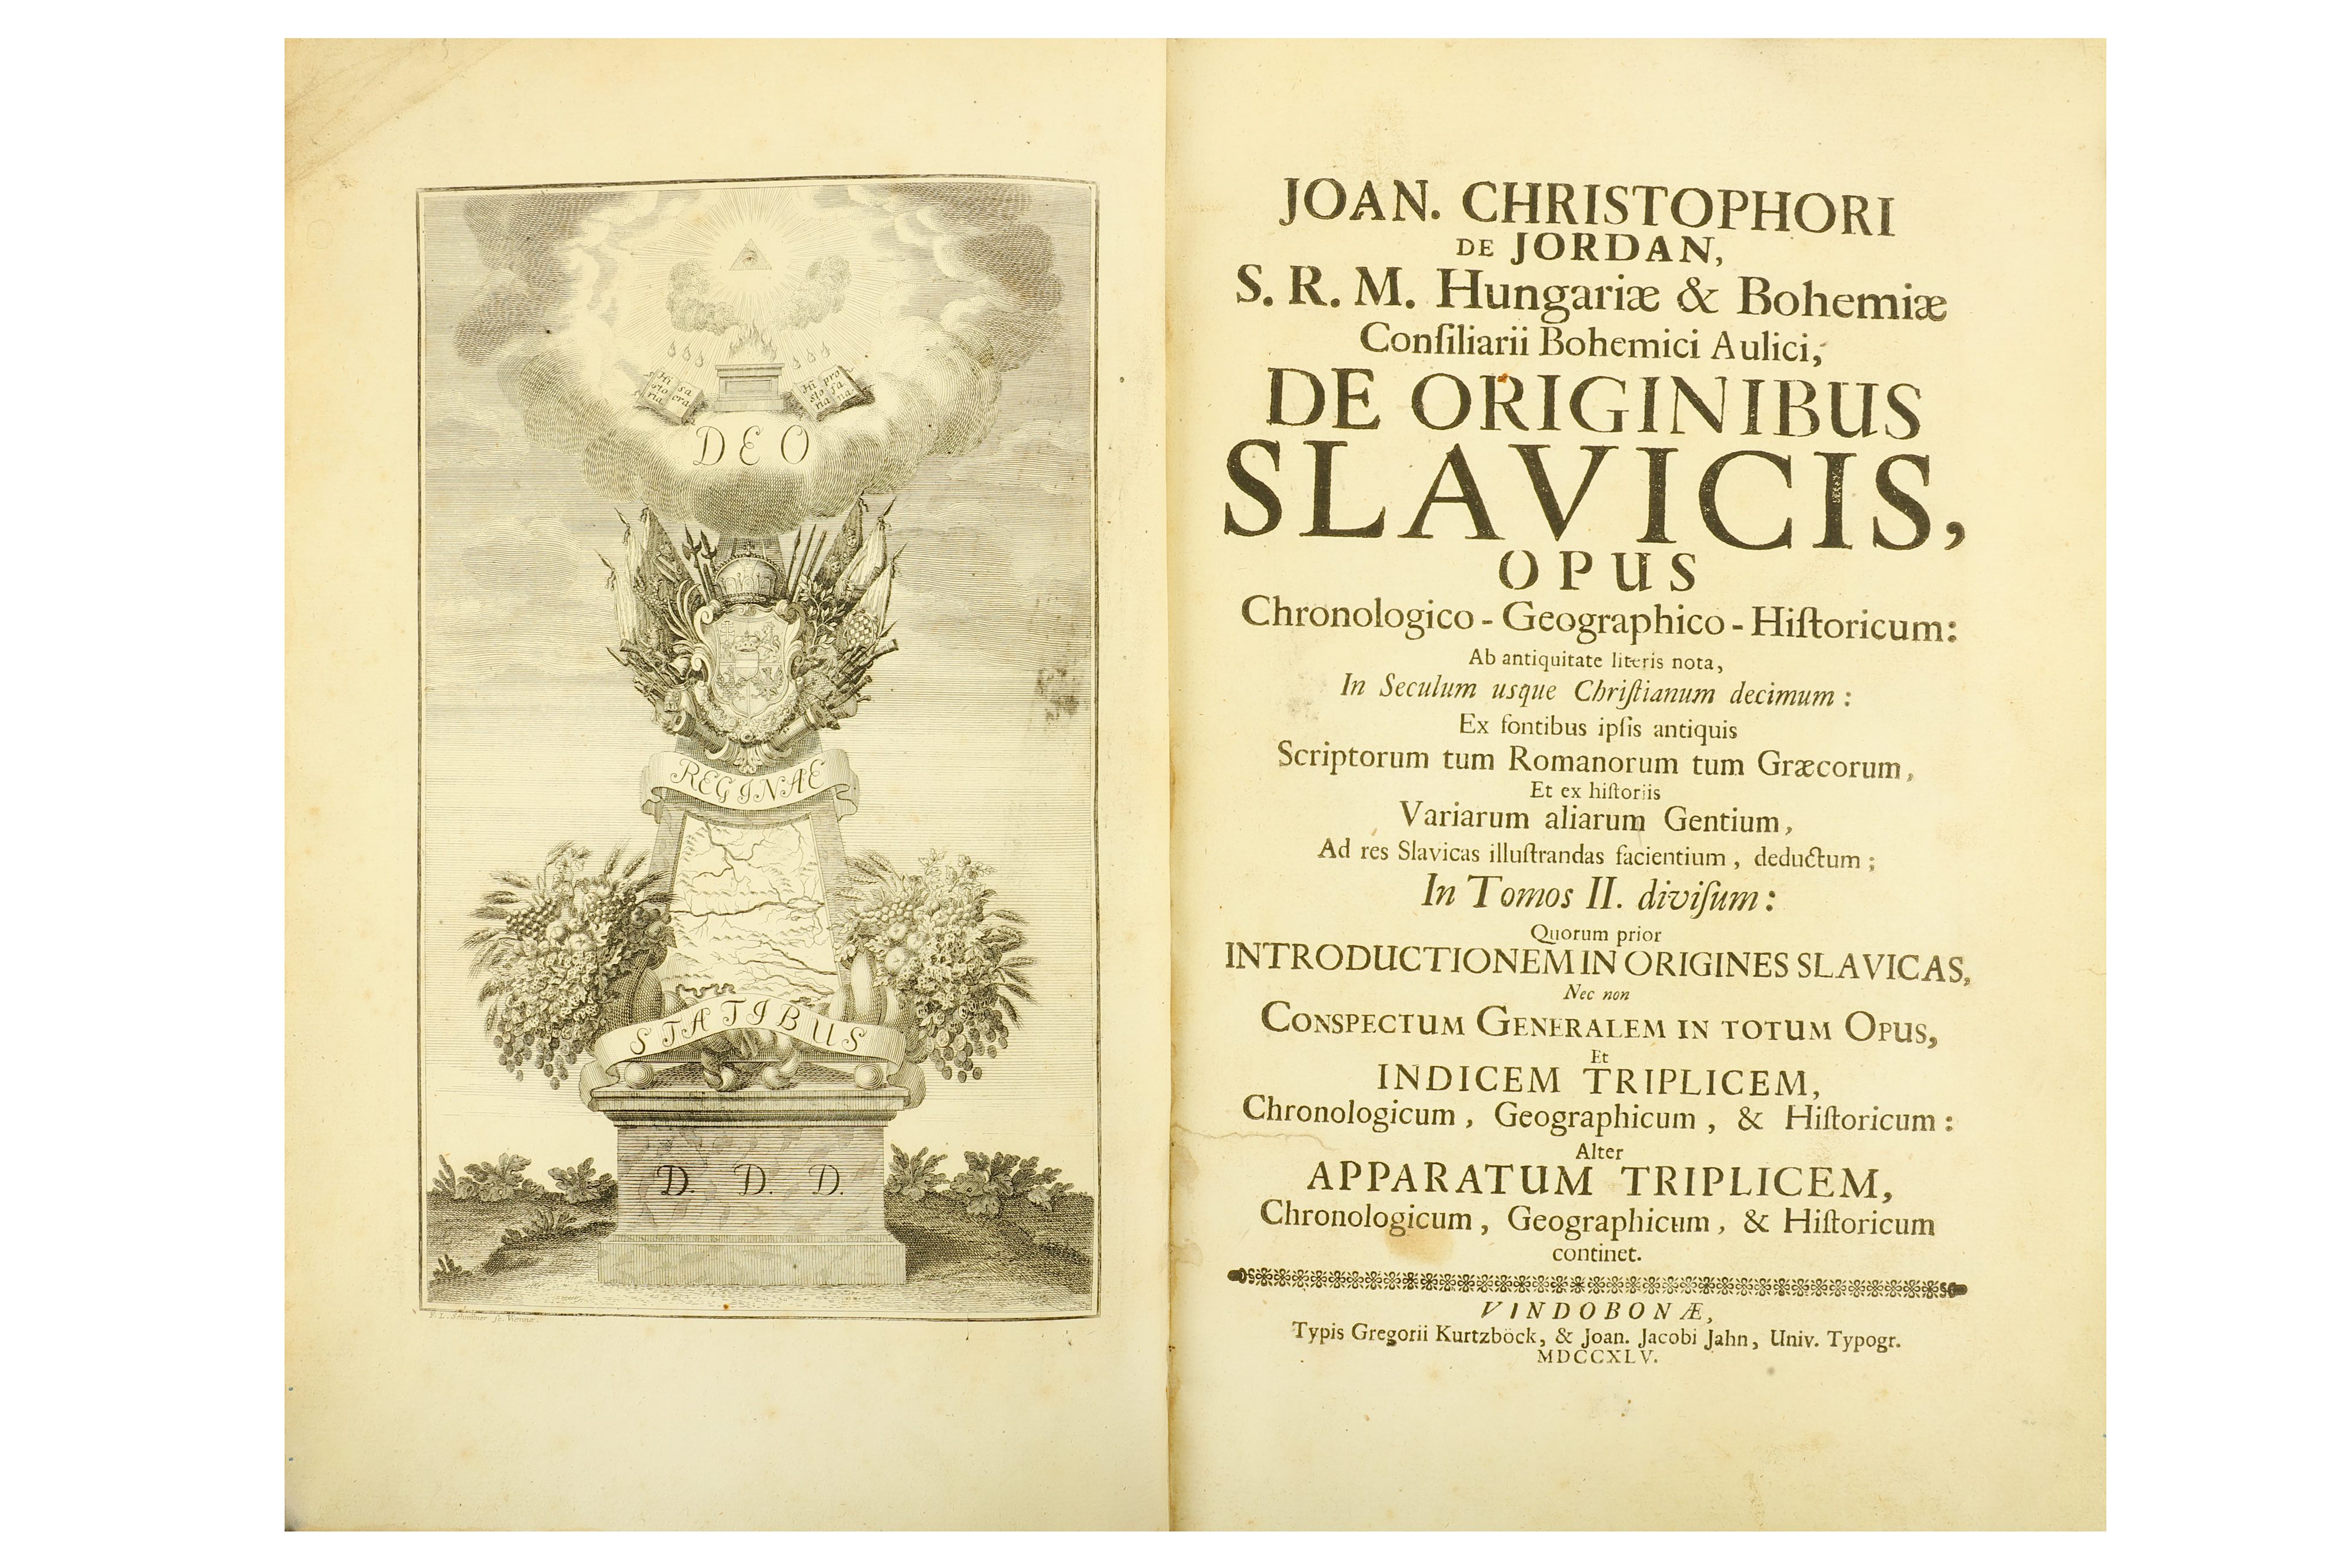 Jordan von (Johannes Christophor) De originibus slavicis - Image 5 of 5